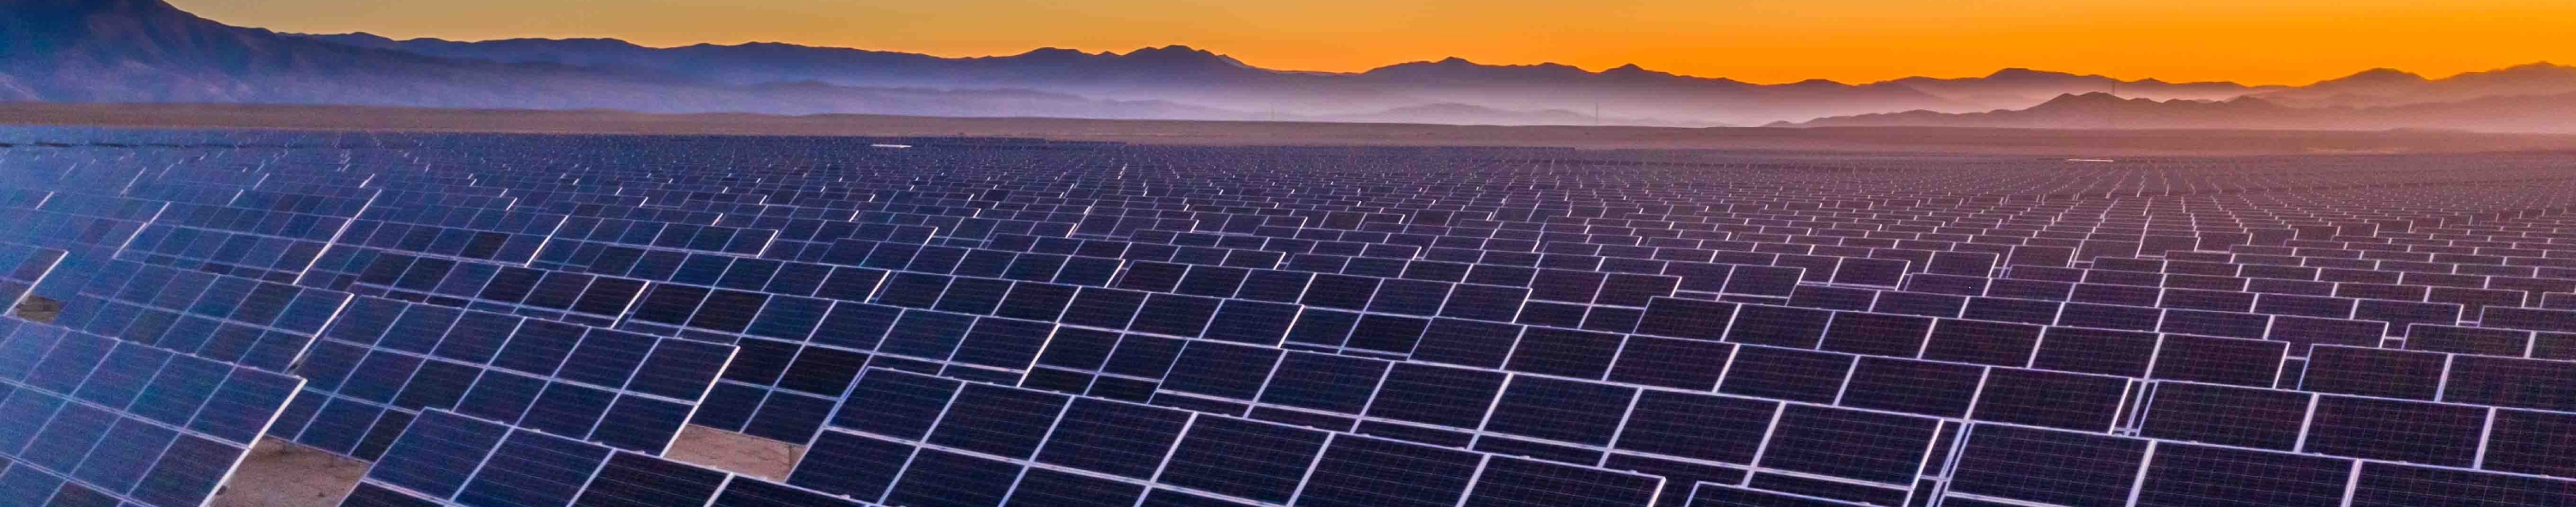 Chile solar energy panels